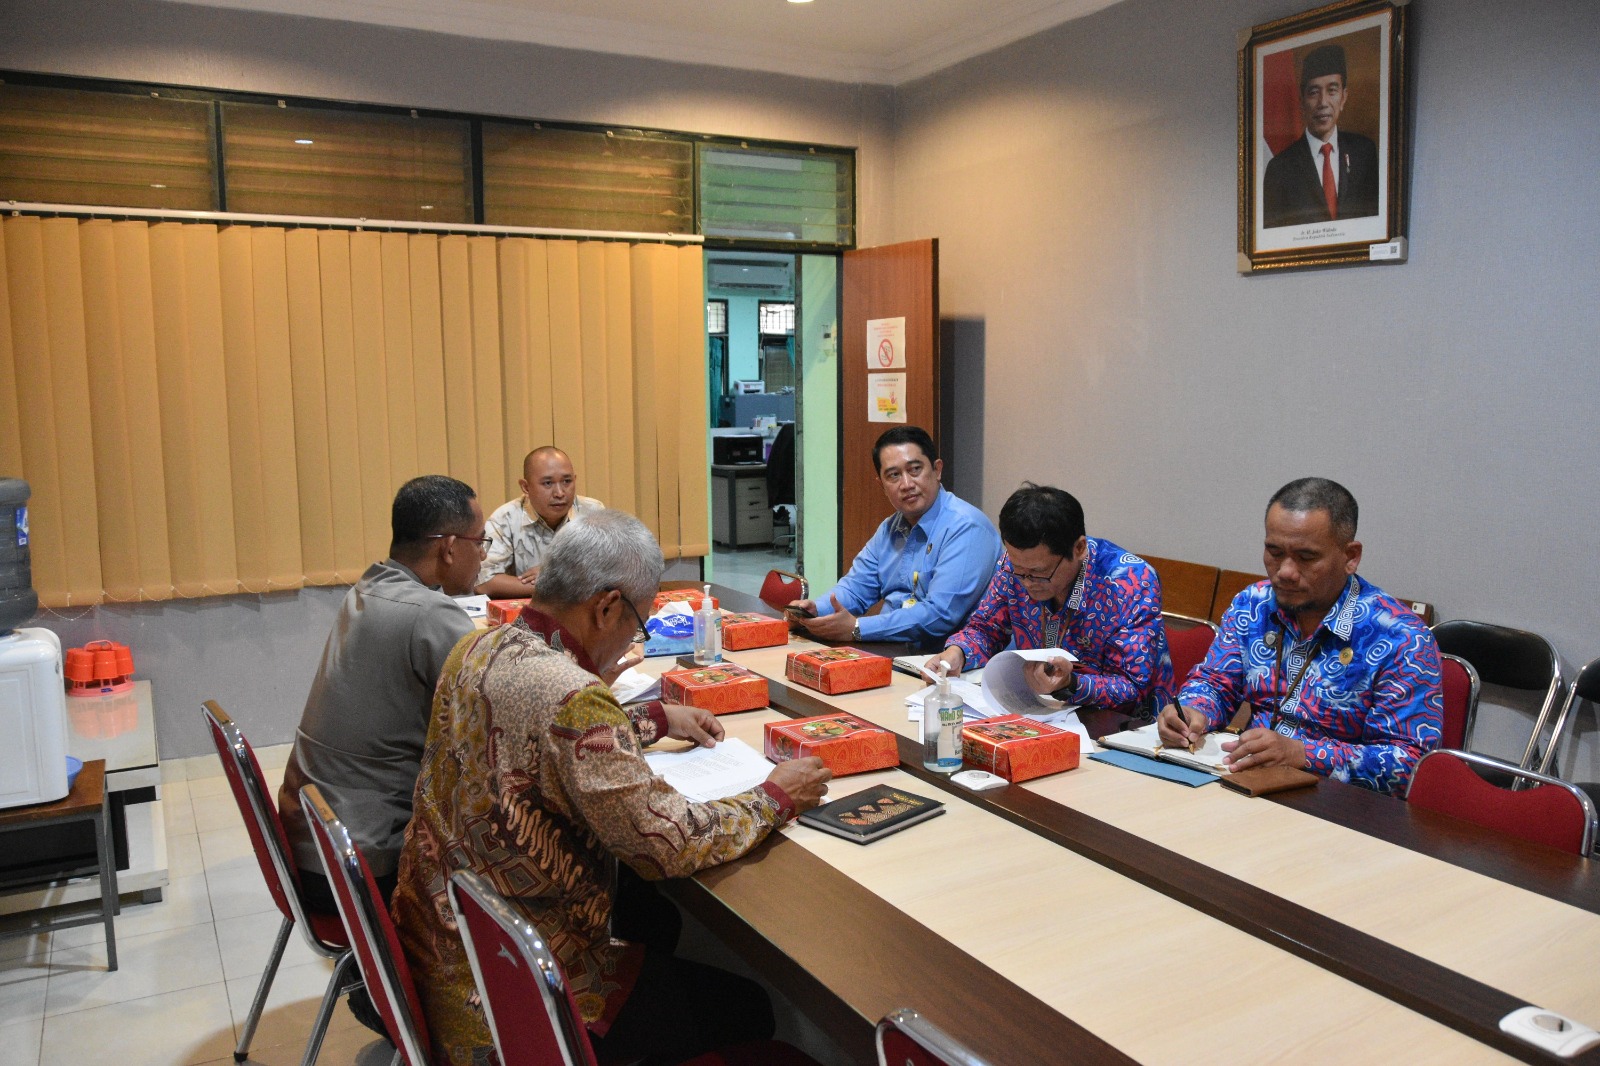 Pengadilan Negeri Yogyakarta Mengikuti Rapat Koordinasi Layanan Bantuan Hukum Bagi Masyarakat Miskin Kota Yogyakarta